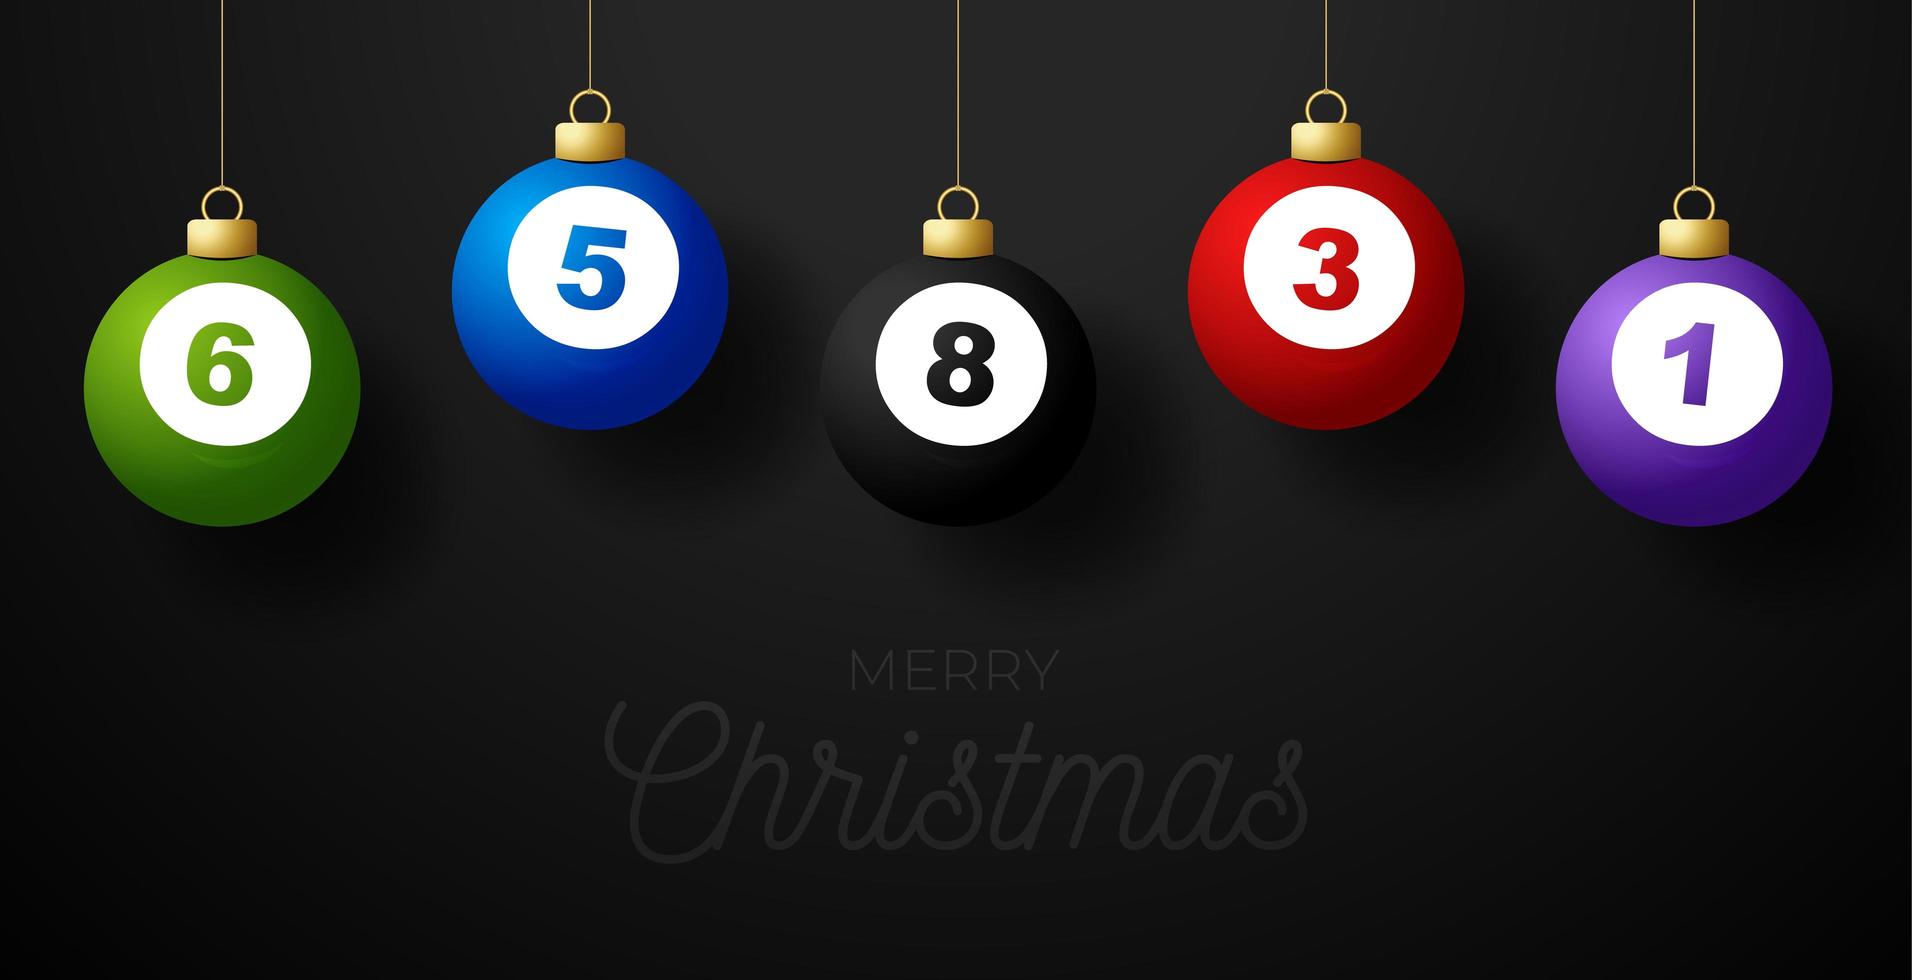 Merry Christmas billiard greeting card. Hang on a thread billiard ball as a Christmas ball on black horizontal background. Sport Vector illustration.